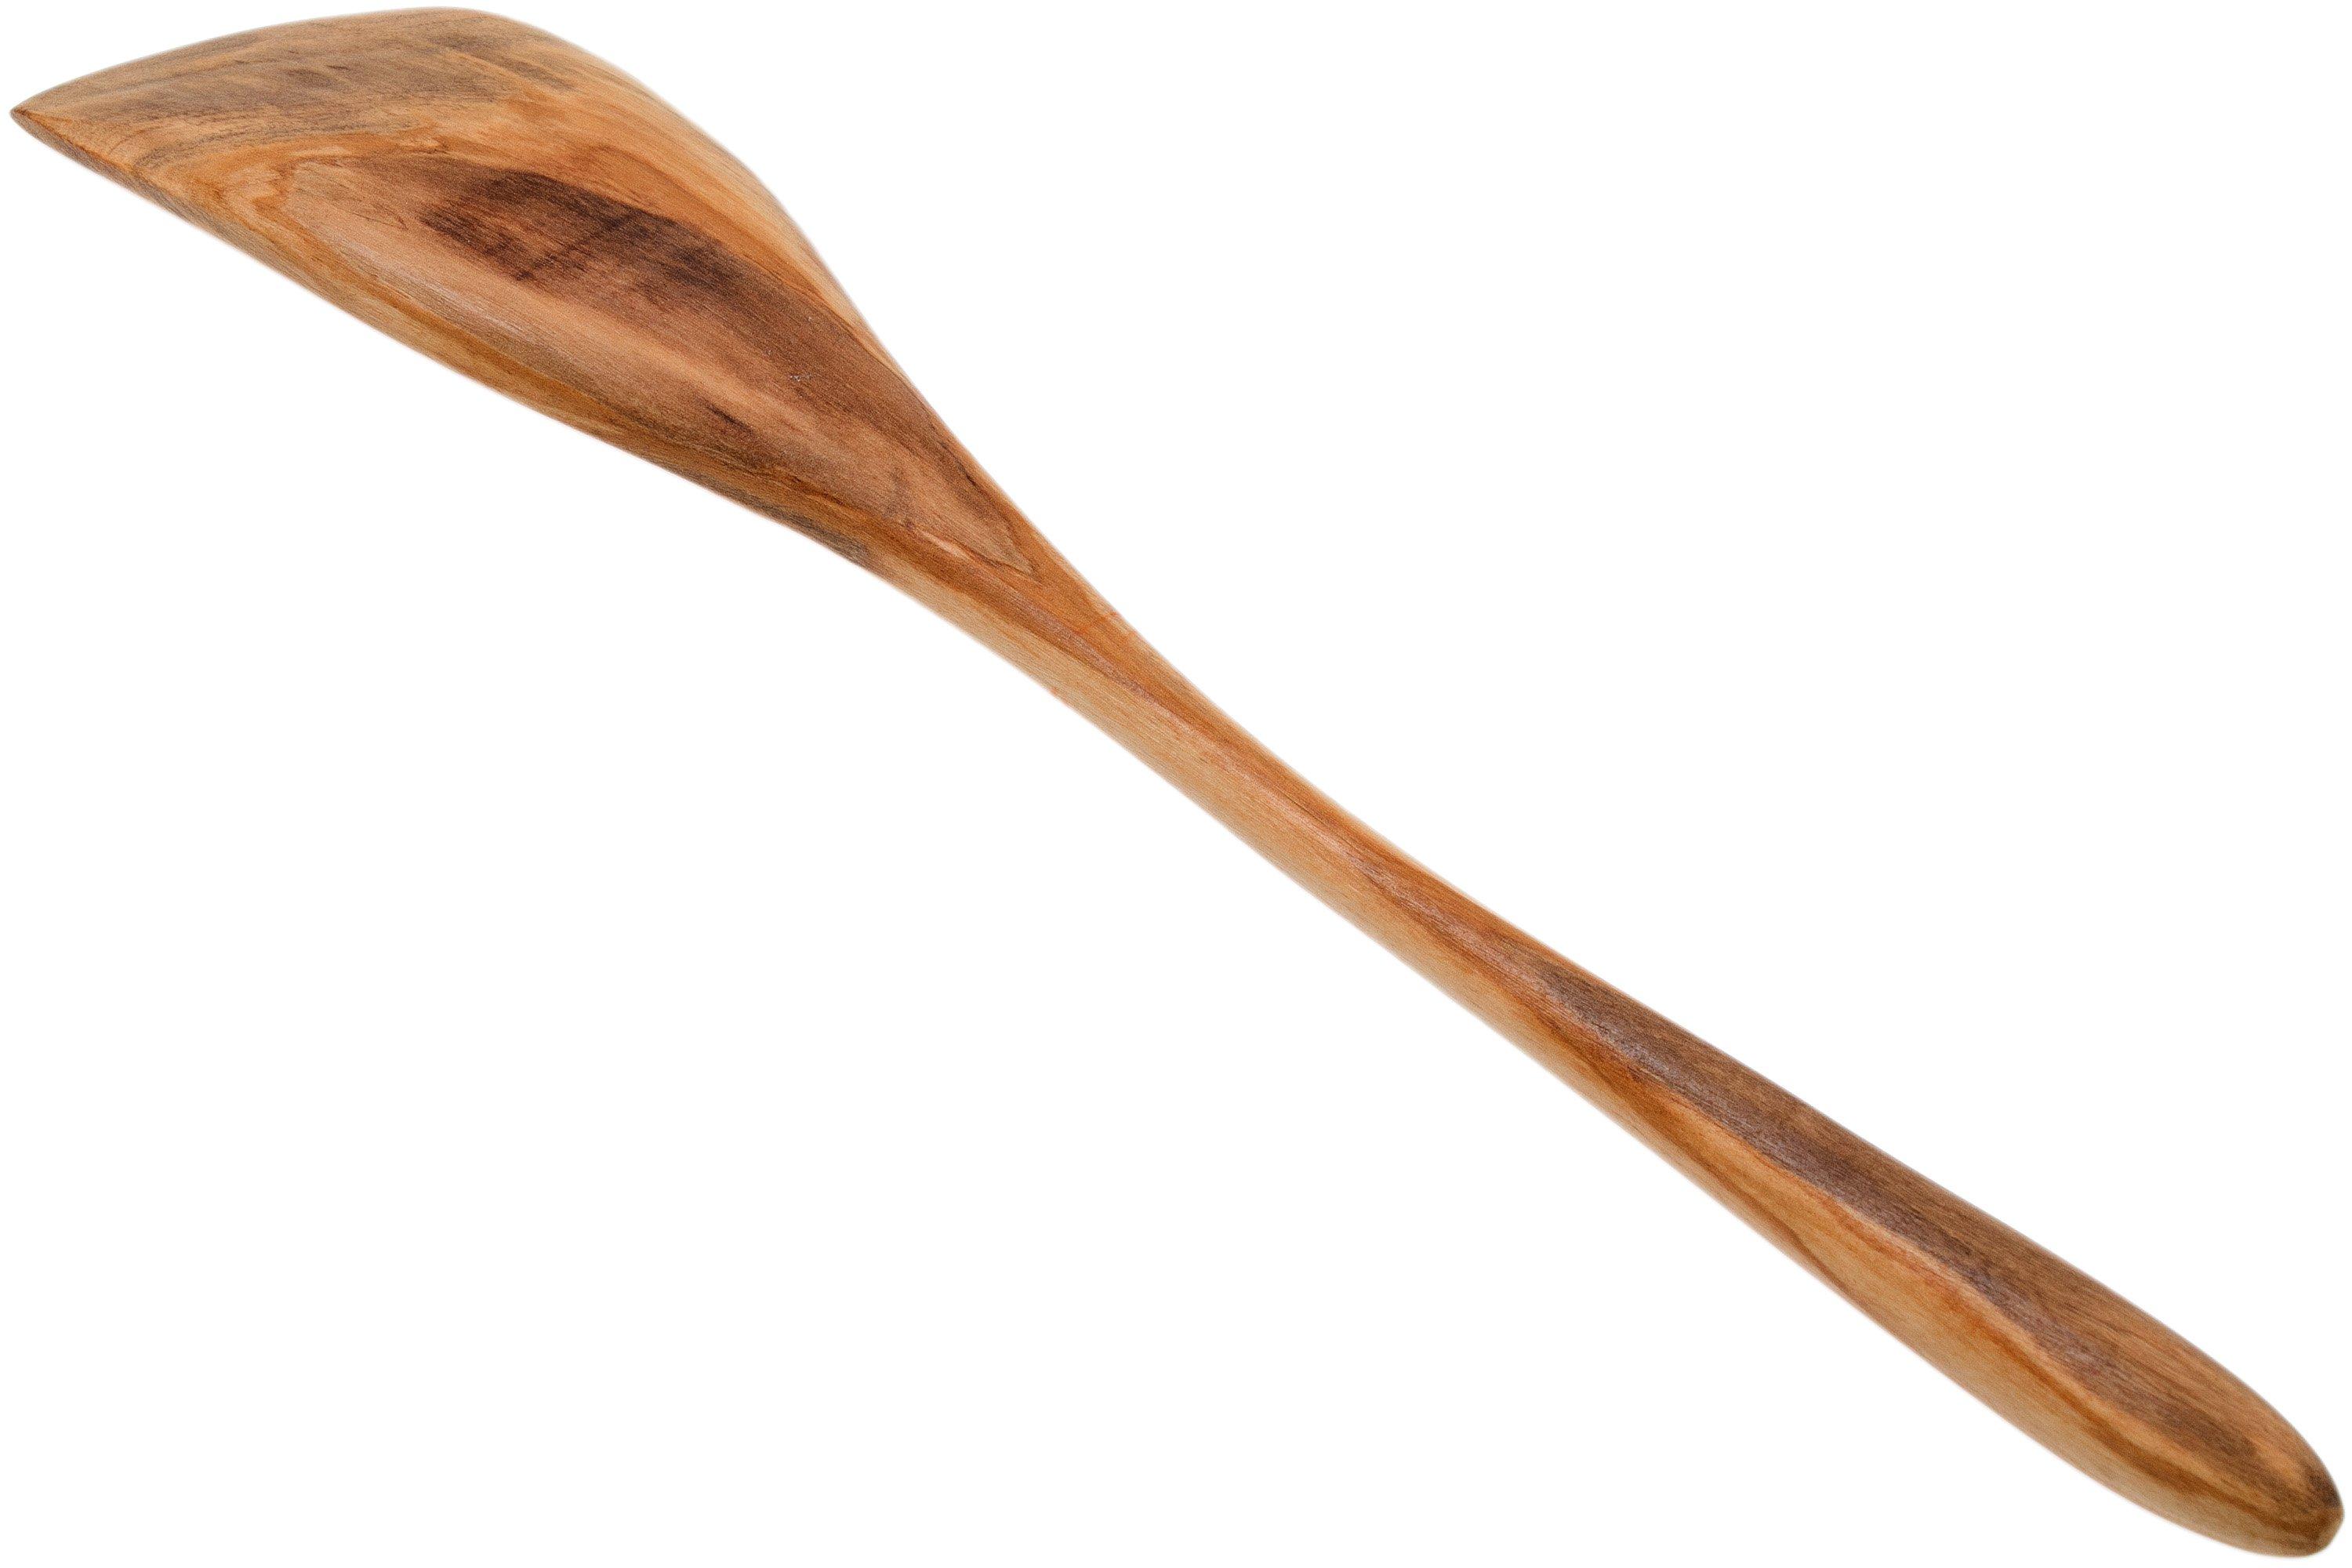 Staub olive wood spatula 40509-252-0  Advantageously shopping at